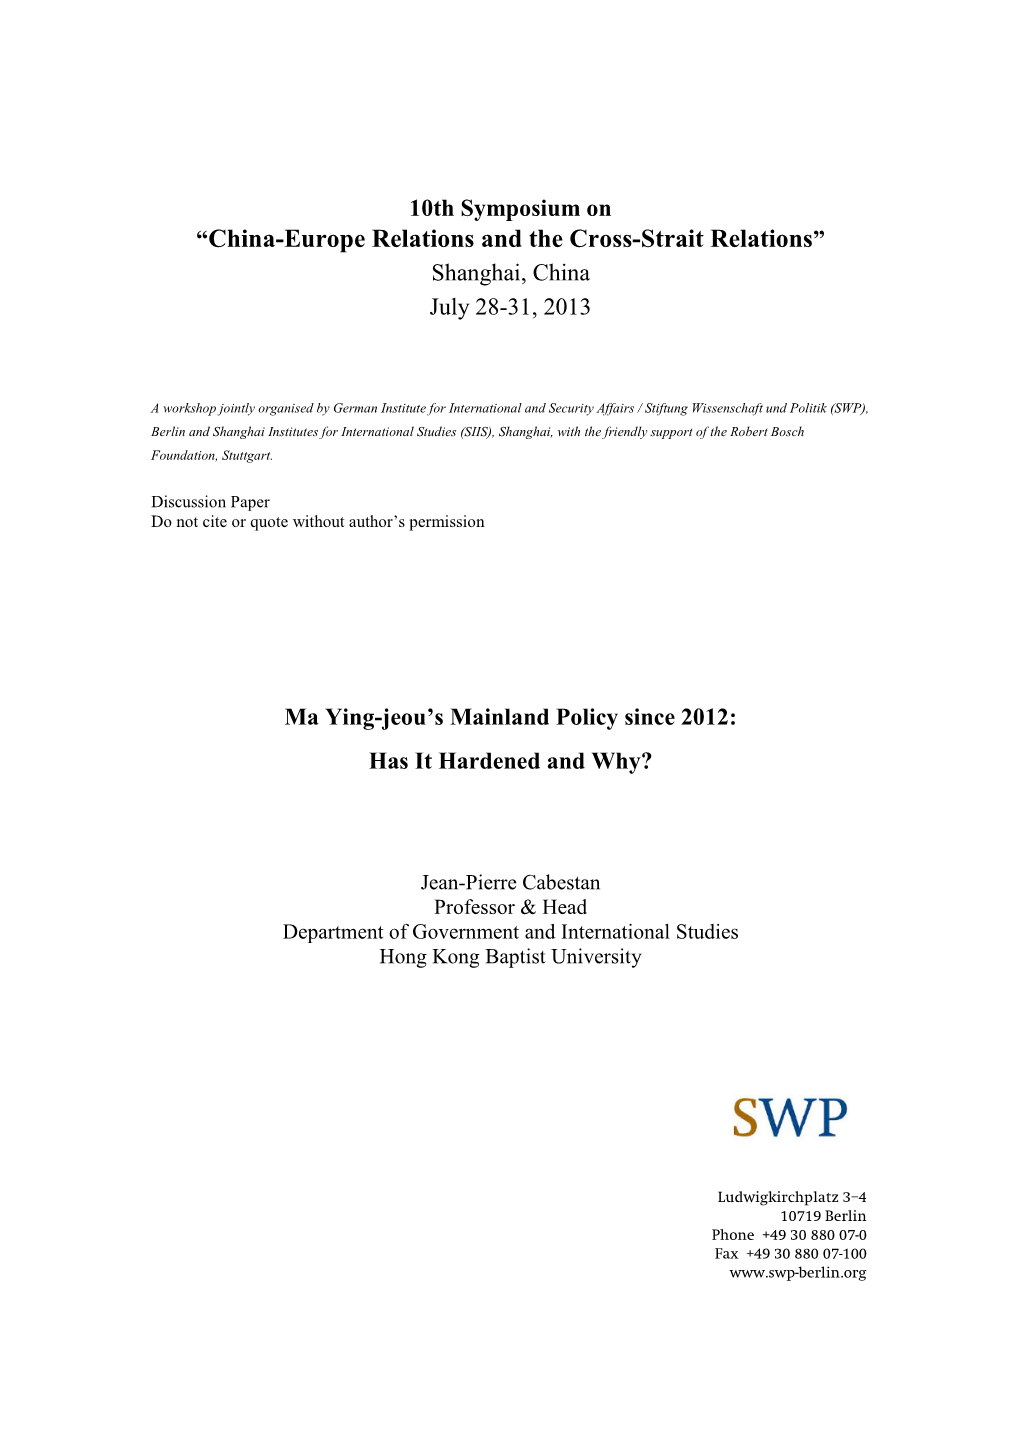 Ma Ying-Jeou's Mainland Policy Since 2012